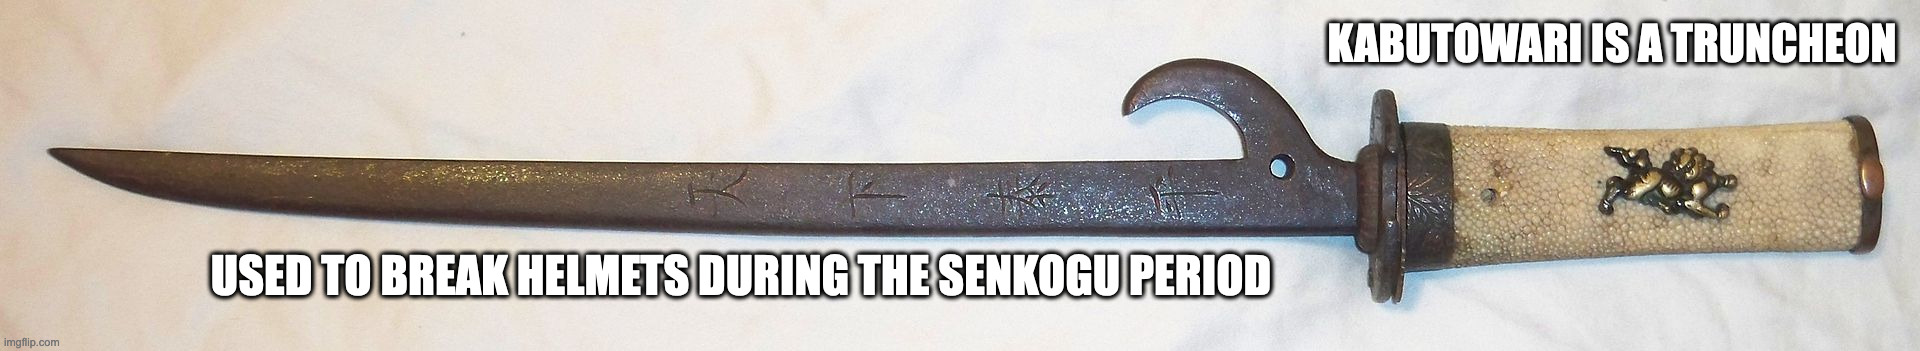 Kabutowari | KABUTOWARI IS A TRUNCHEON; USED TO BREAK HELMETS DURING THE SENKOGU PERIOD | image tagged in weapons,memes | made w/ Imgflip meme maker